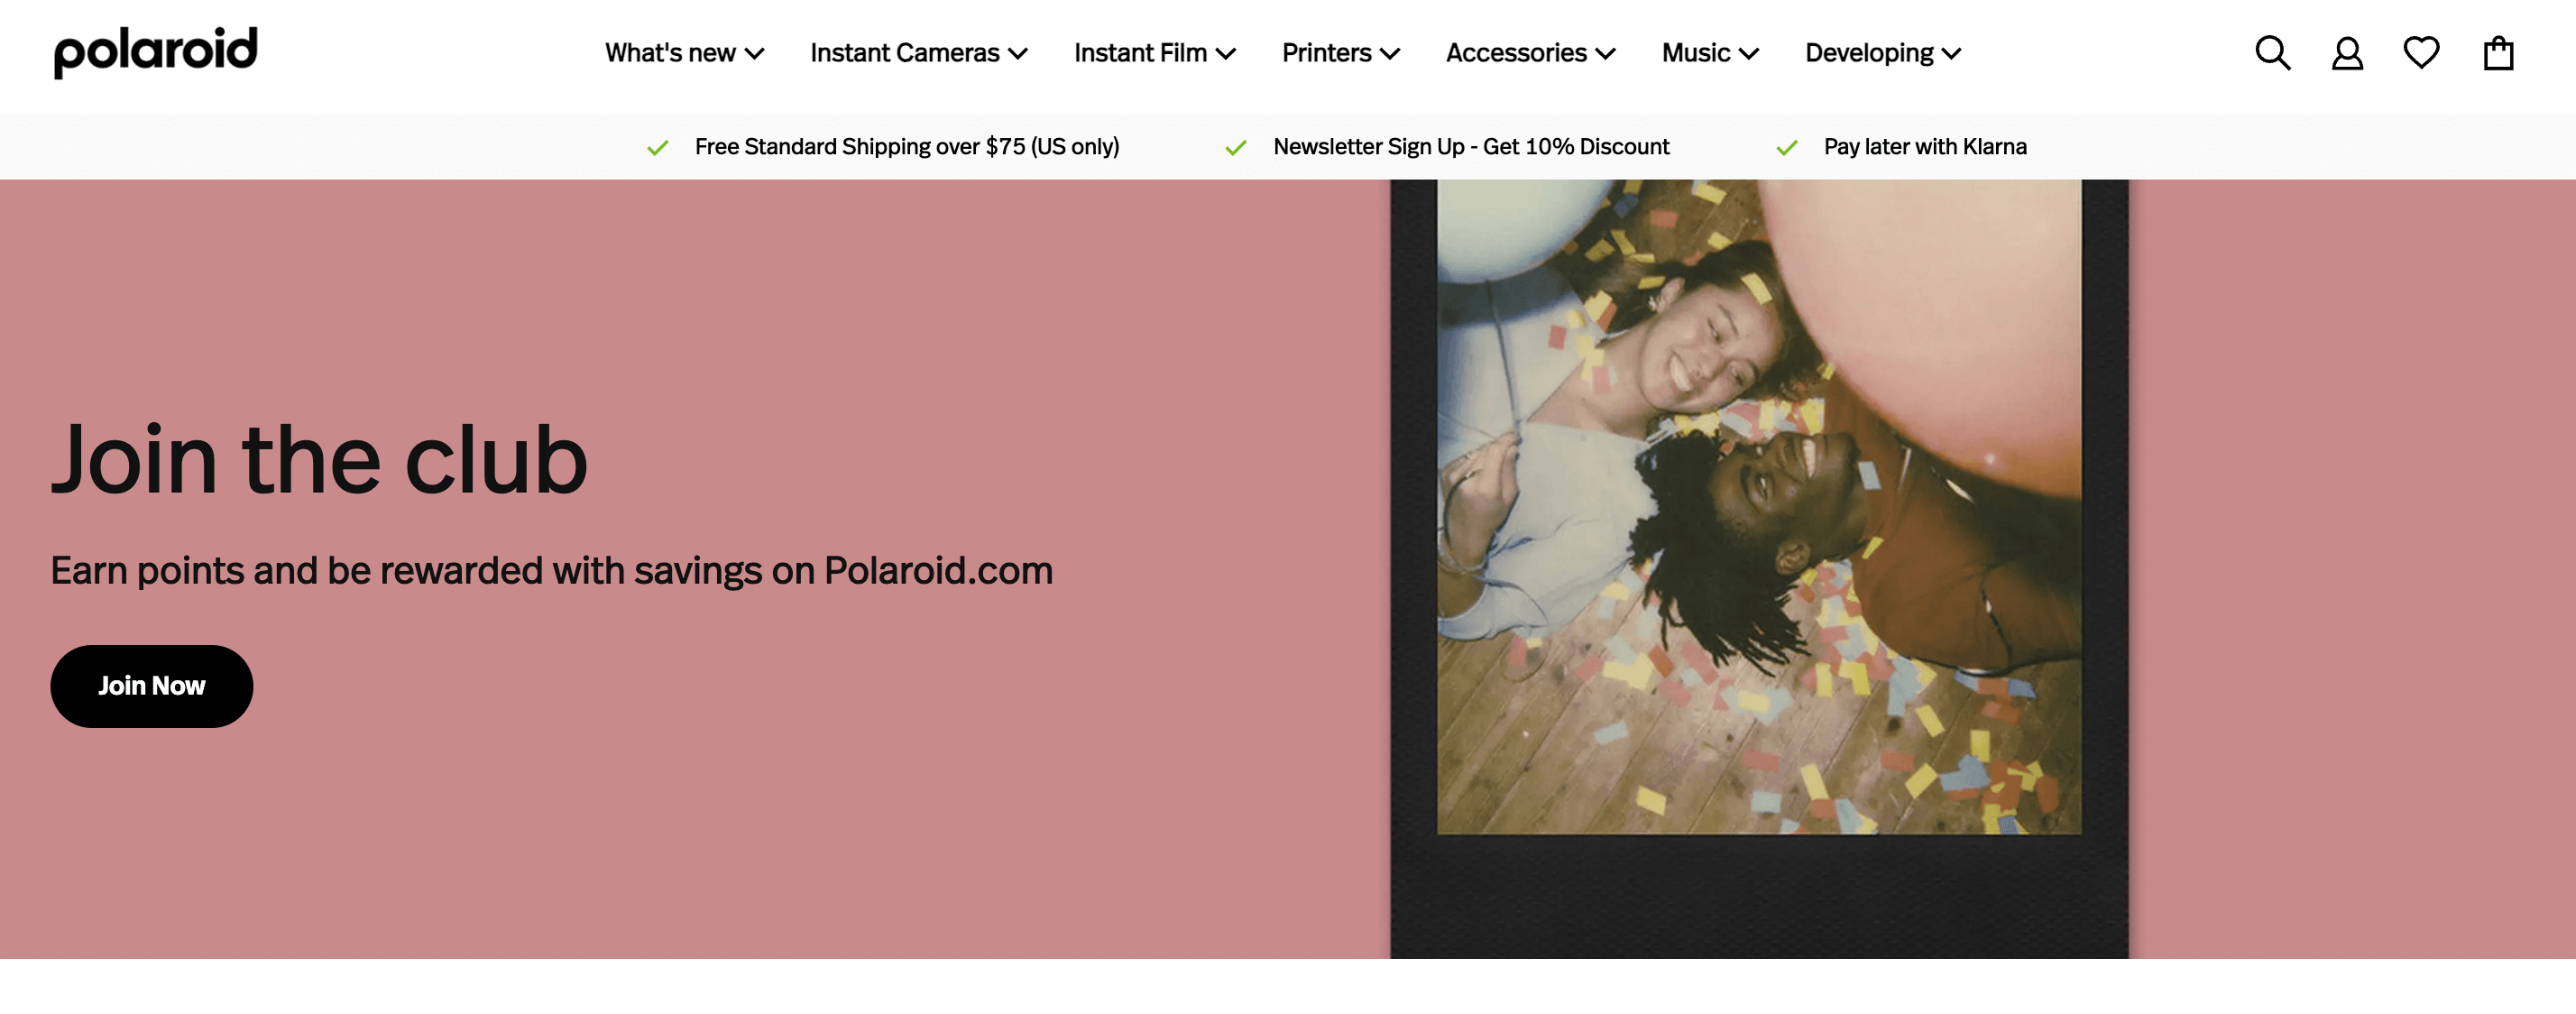 screenshot of polaroid website homepage